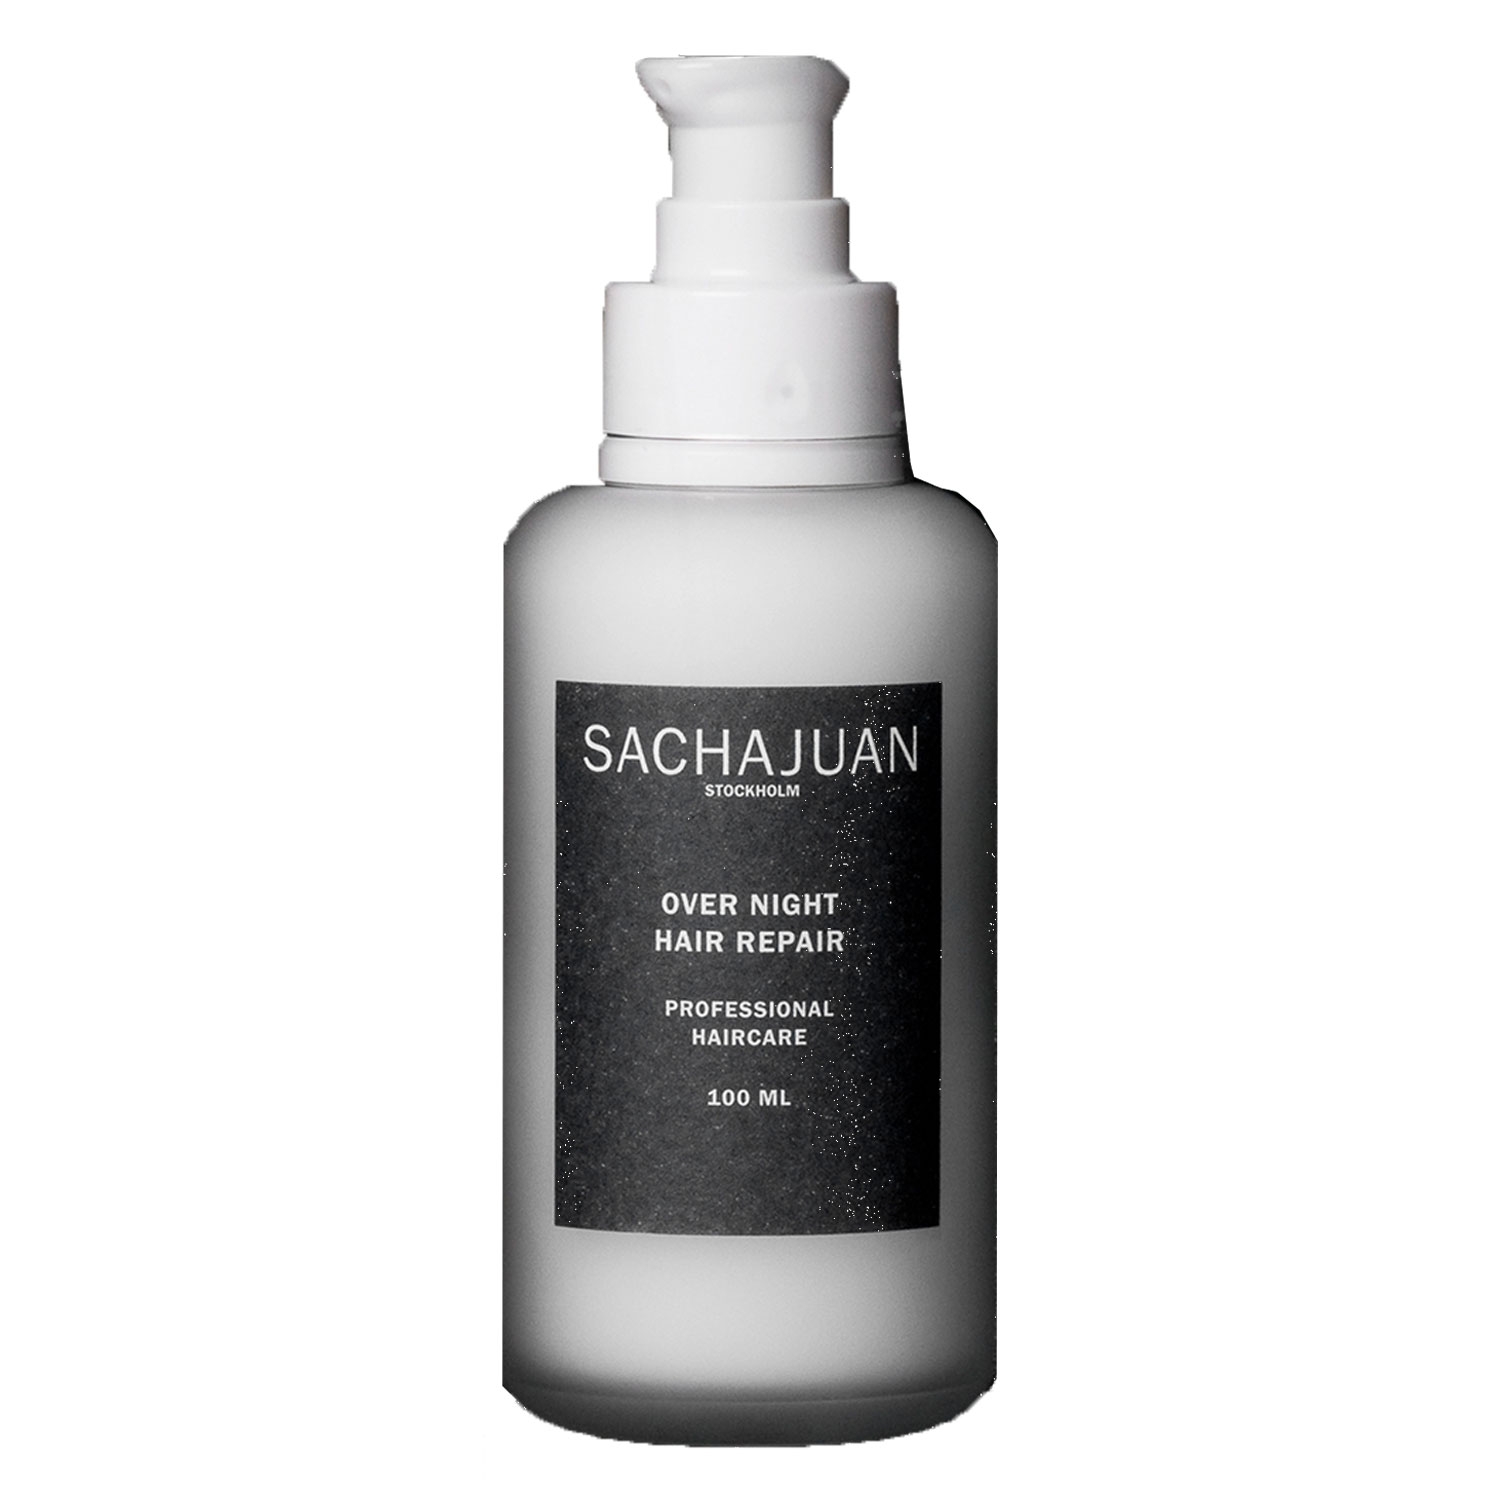 Produktbild von SACHAJUAN - Over Night Hair Repair